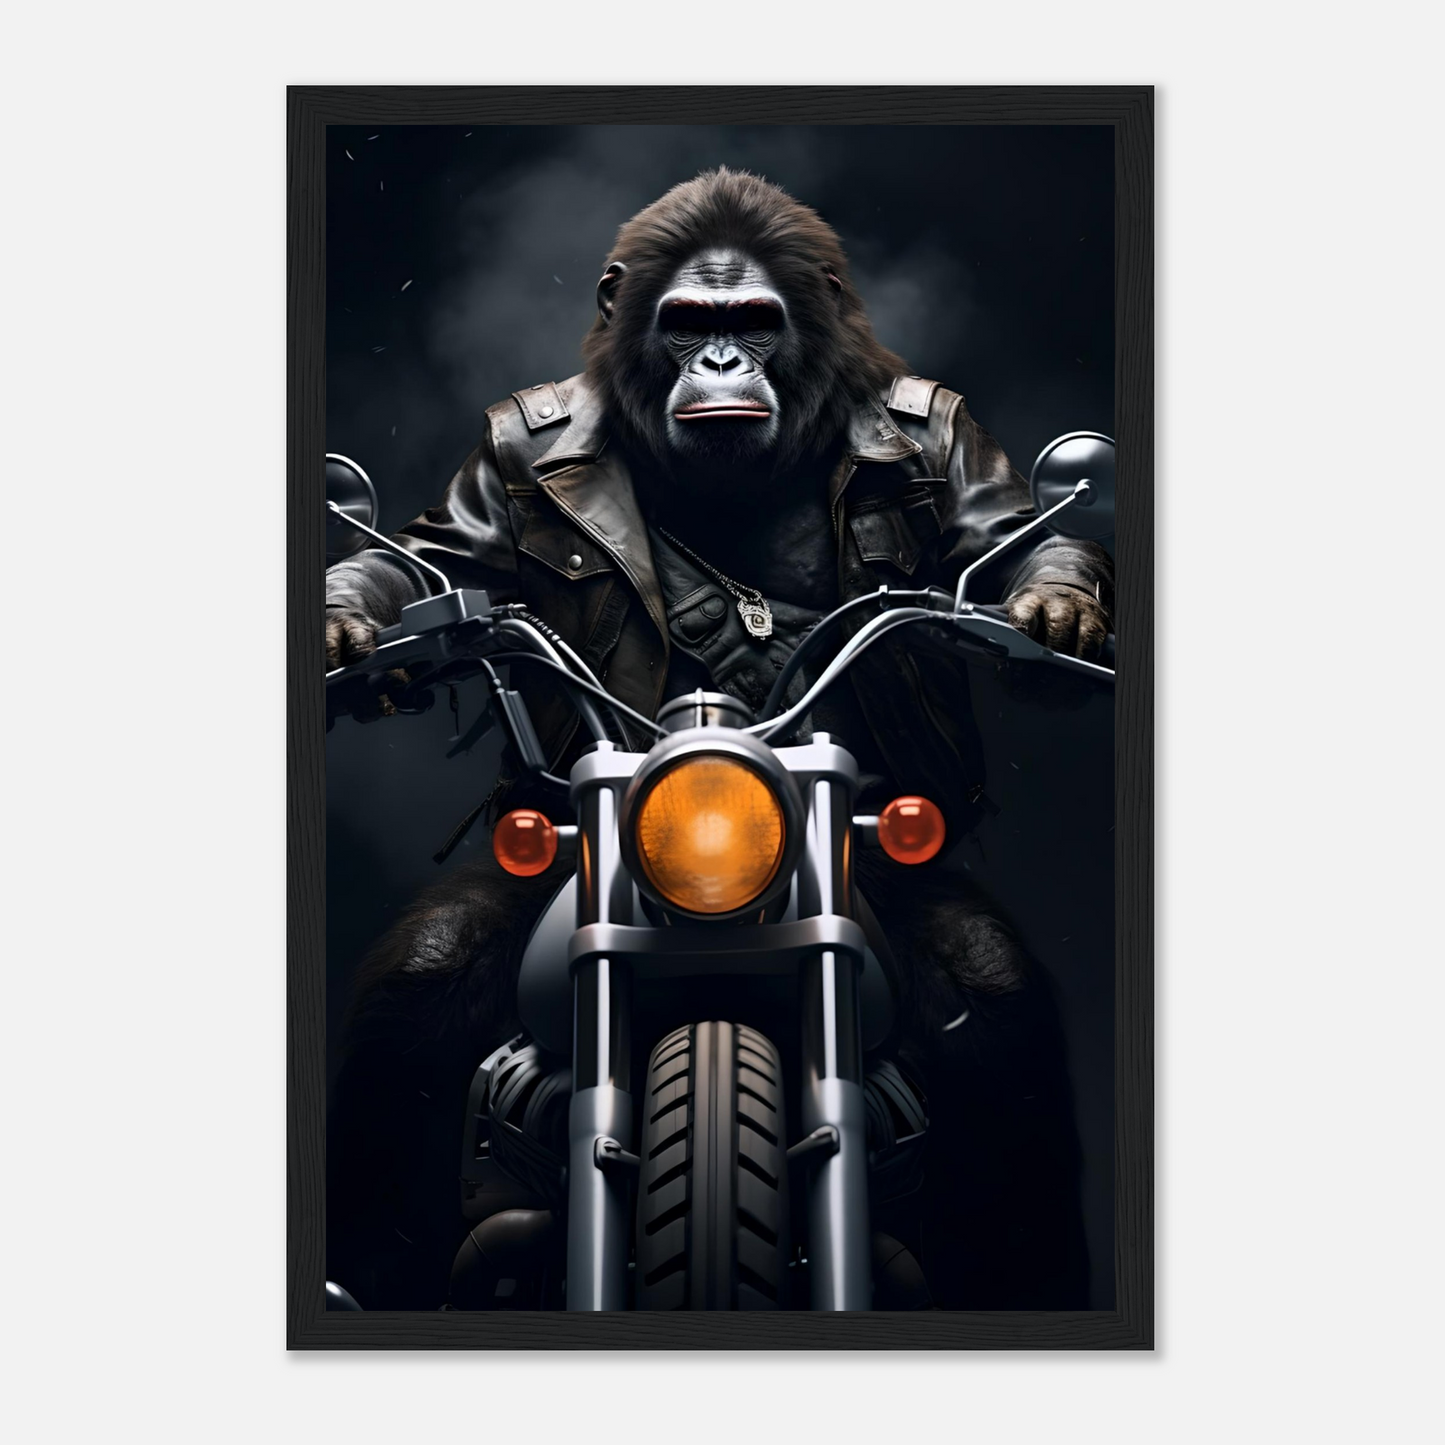 Motorbike Gorilla